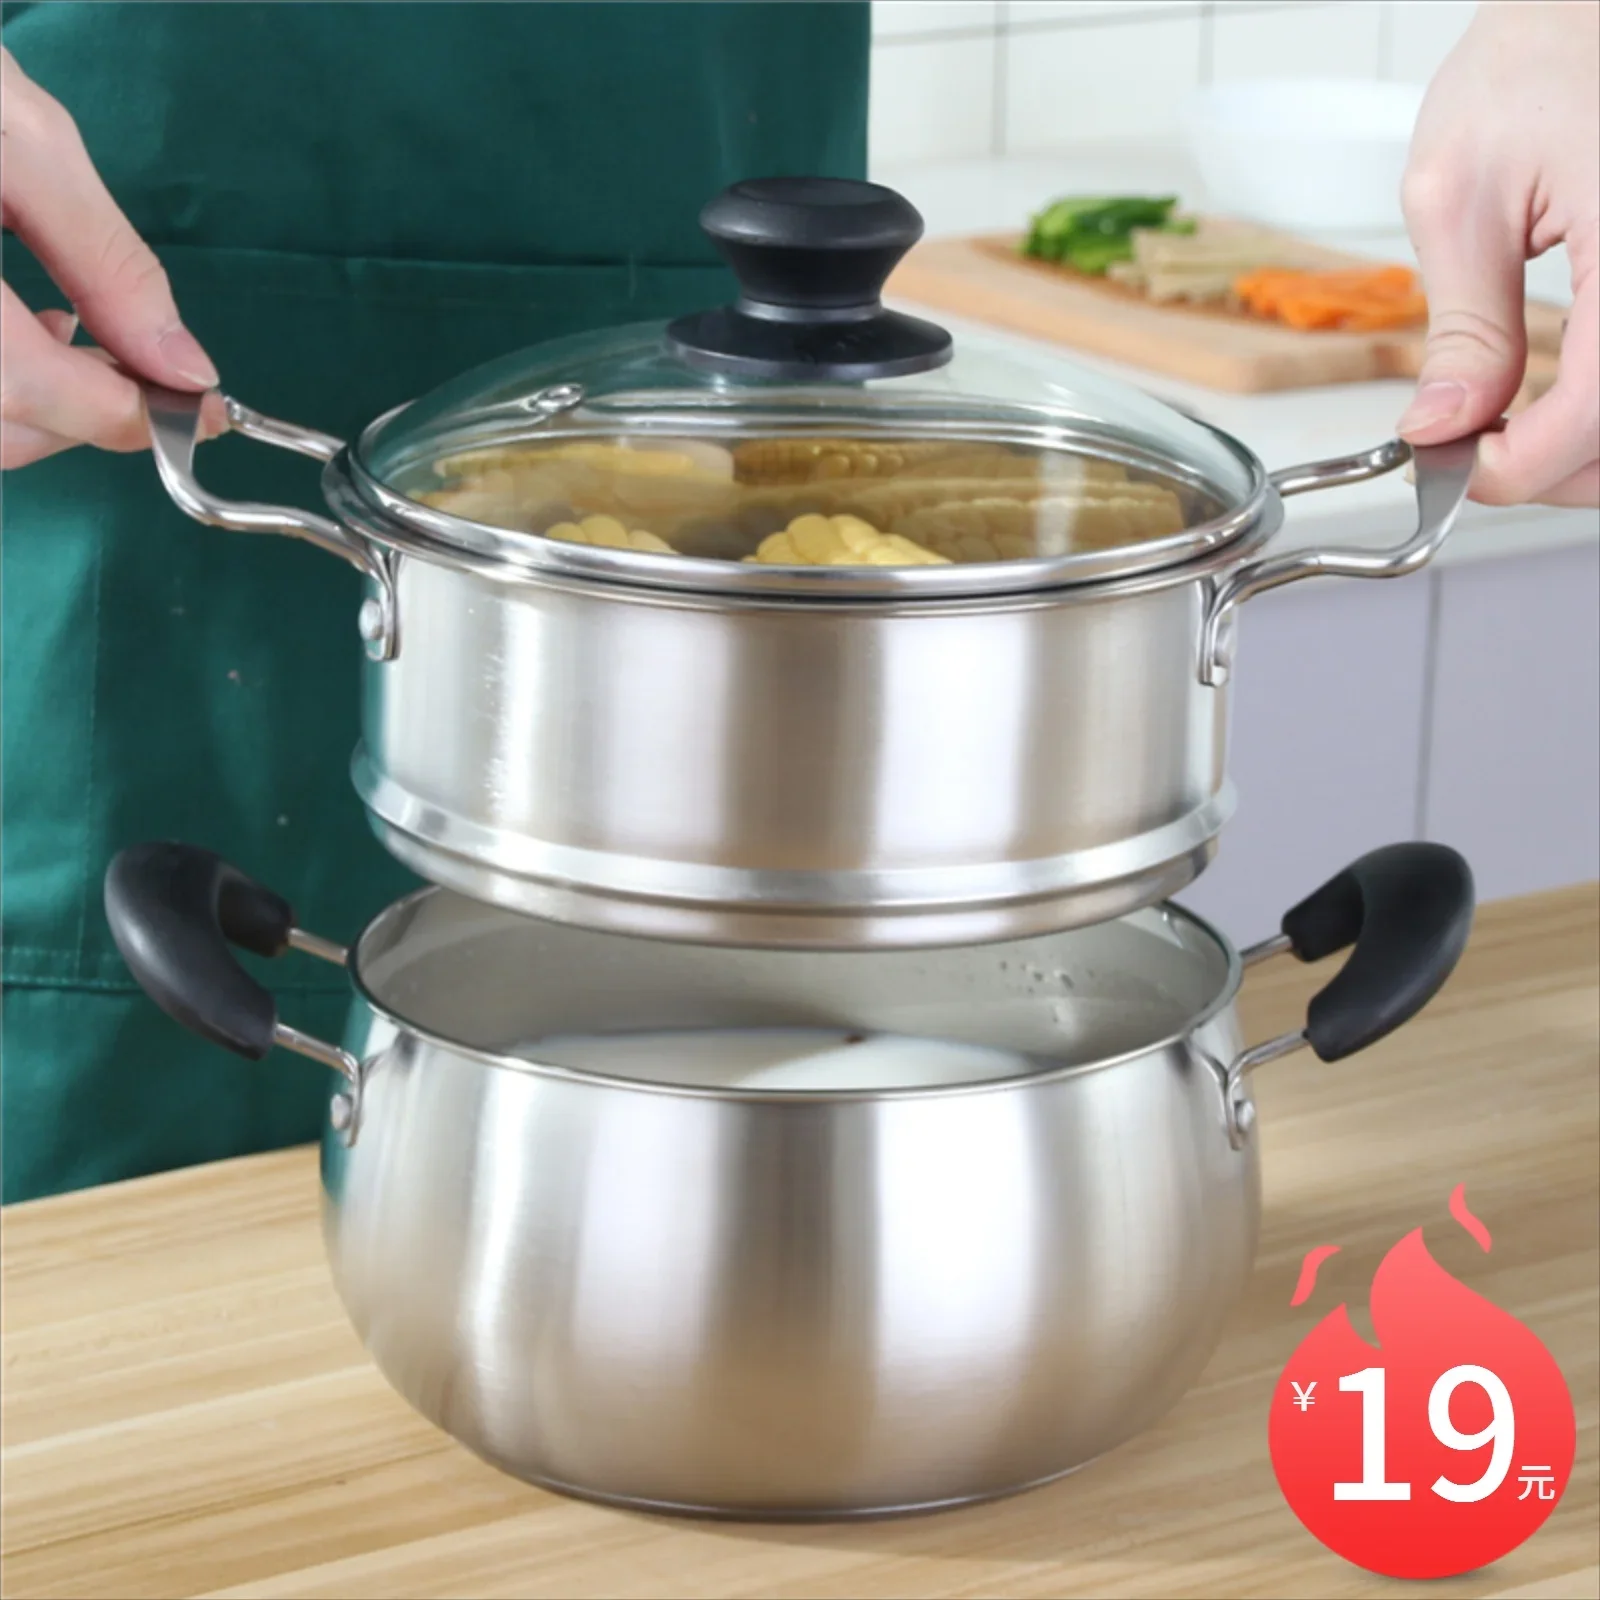 Thick 304 Stainless Steel Soup Pot Household Double-Ear Small Saucepan Steamer Milk Pot Gas Induction Cooker Porridge Soup Coying Pot